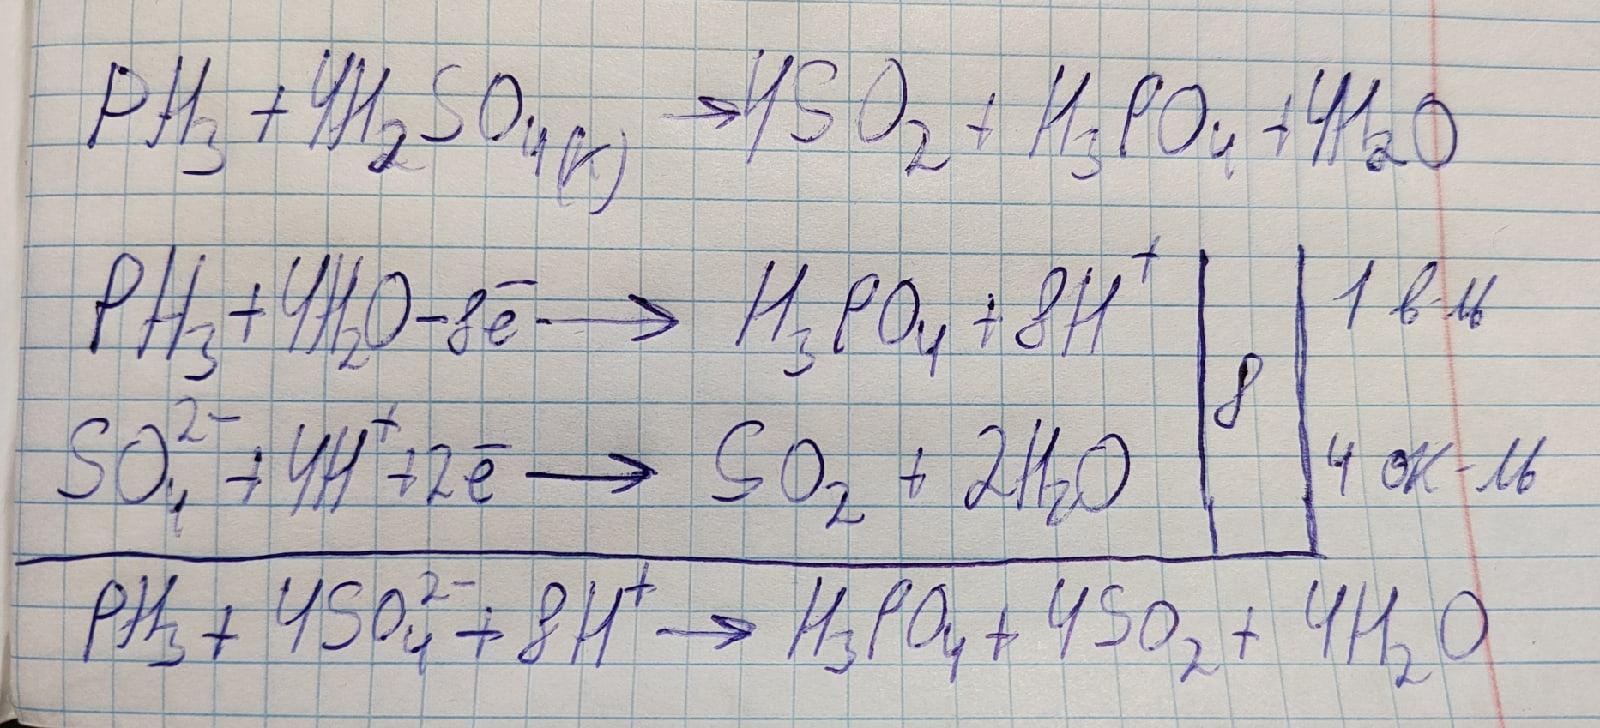 Sio2 h2so4 конц. Метод электронно-ионного баланса. Ph3 h2so4 конц. Электронно ионный баланс. Fe+h2so4 конц электронный баланс.